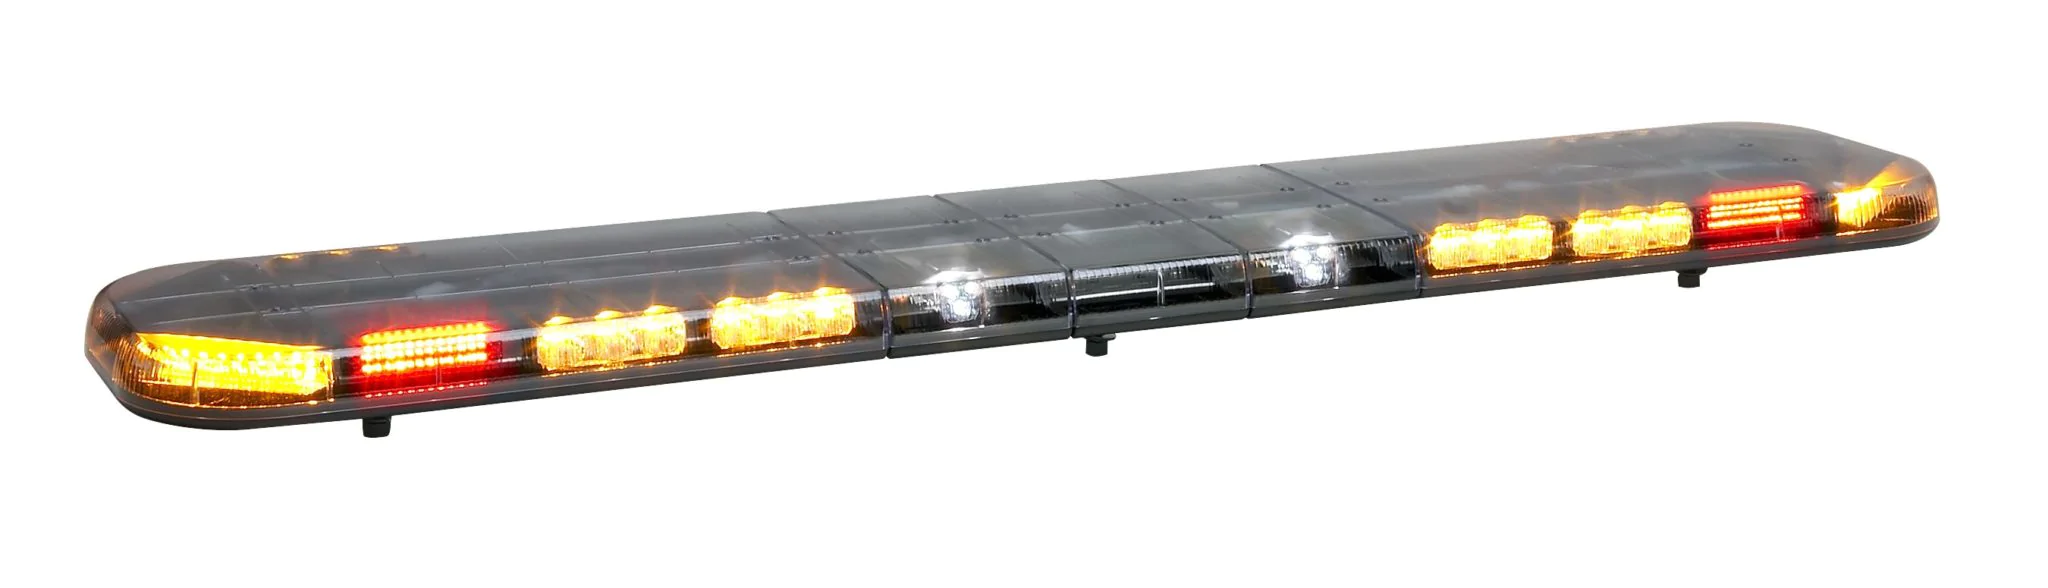 Whelen Towman's   Justice Series Linear-LED Lightbar